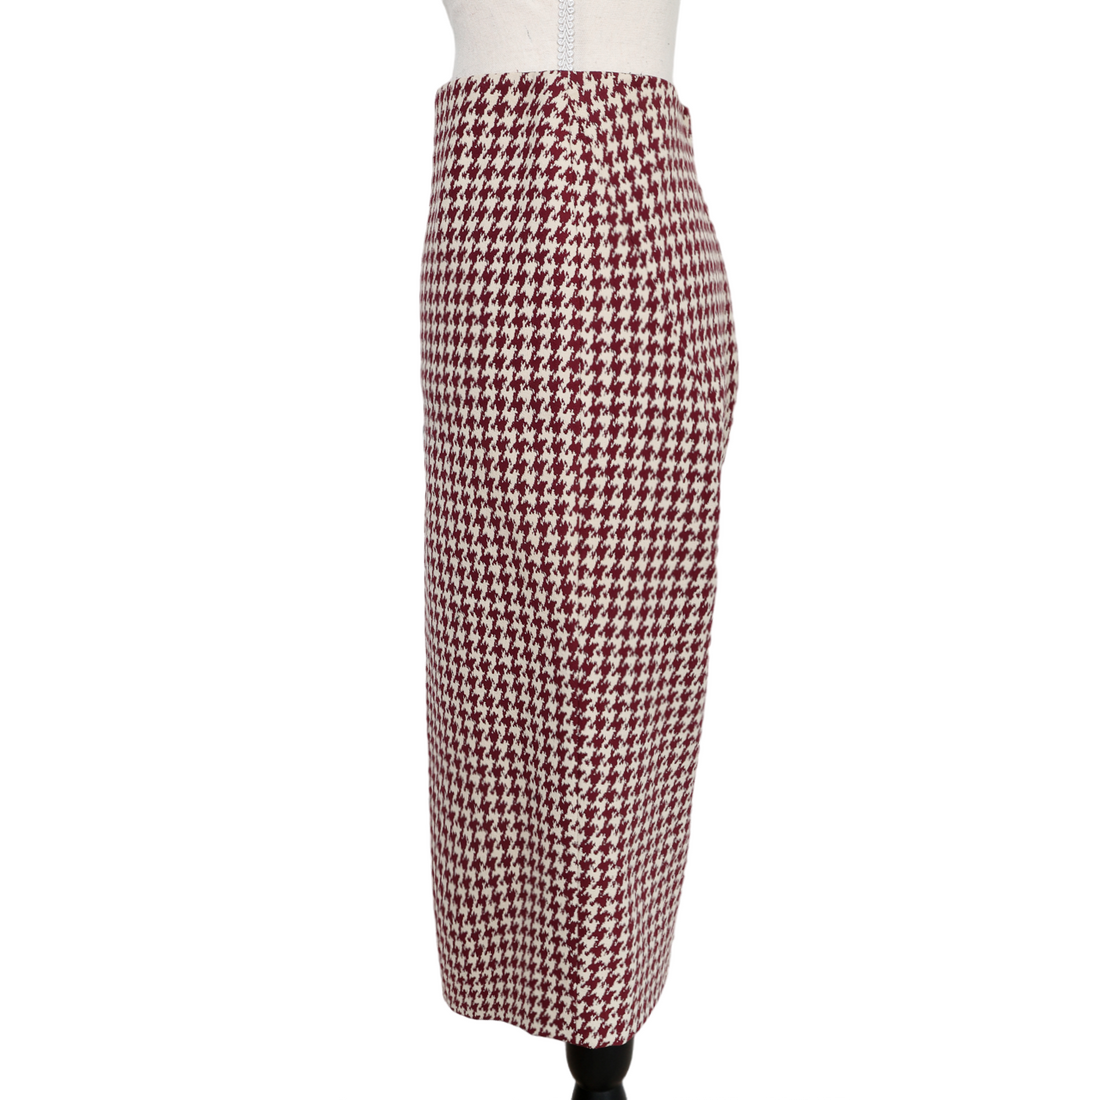 Victoria Beckham houndstooth zipped stretch skirt